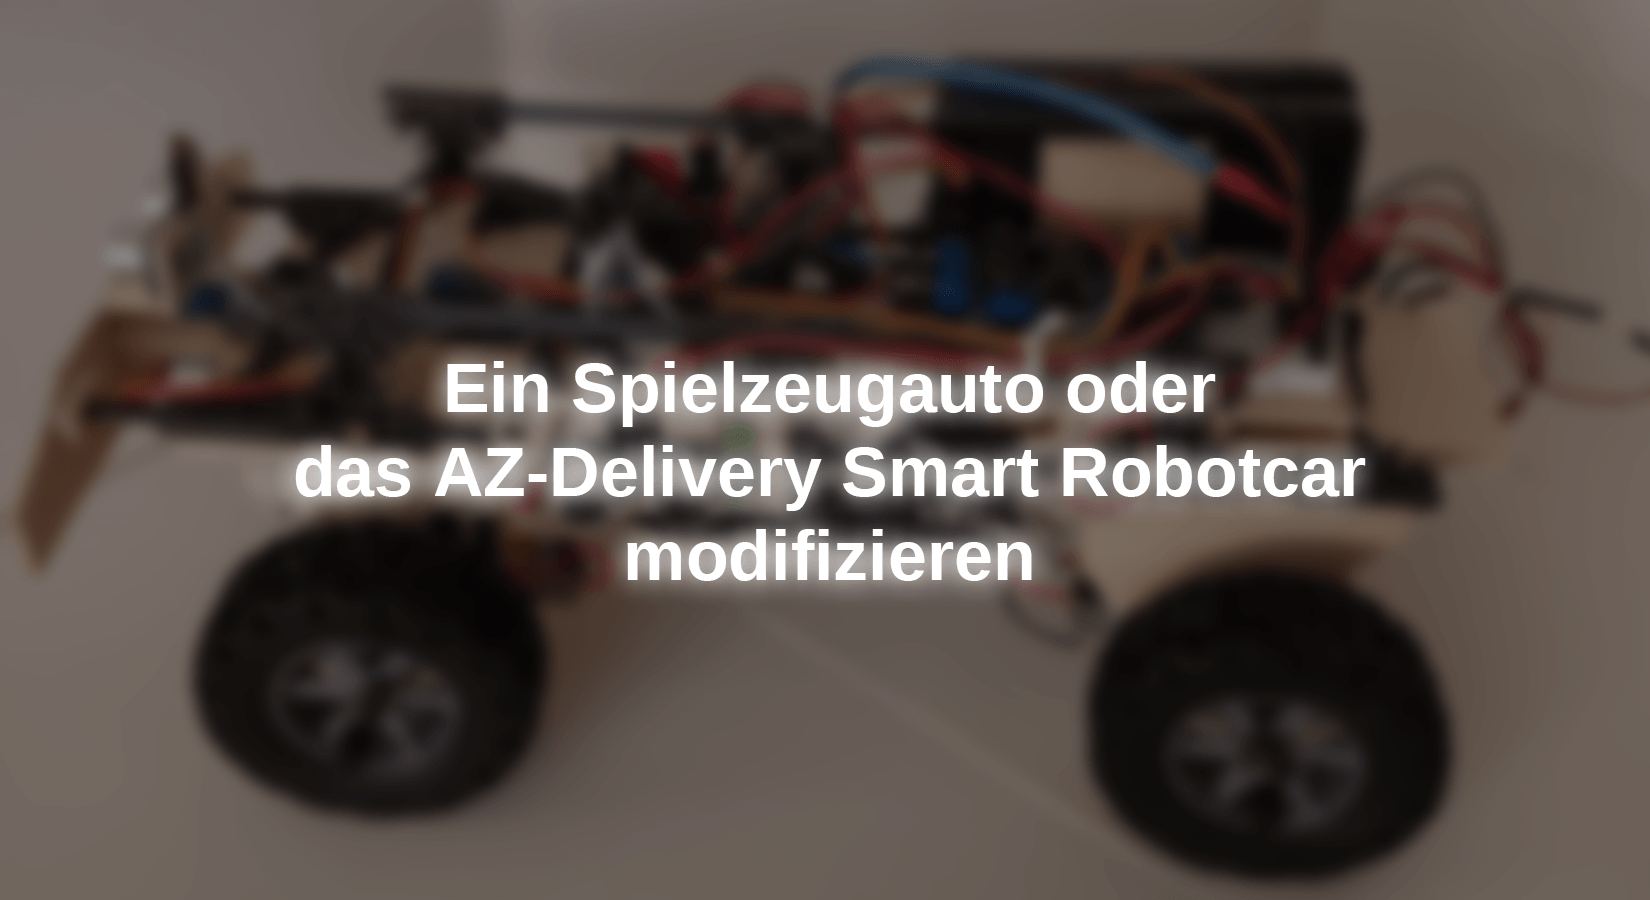 Ein Spielzeugauto oder das AZ-Delivery Smart Robotcar modifizieren - AZ-Delivery